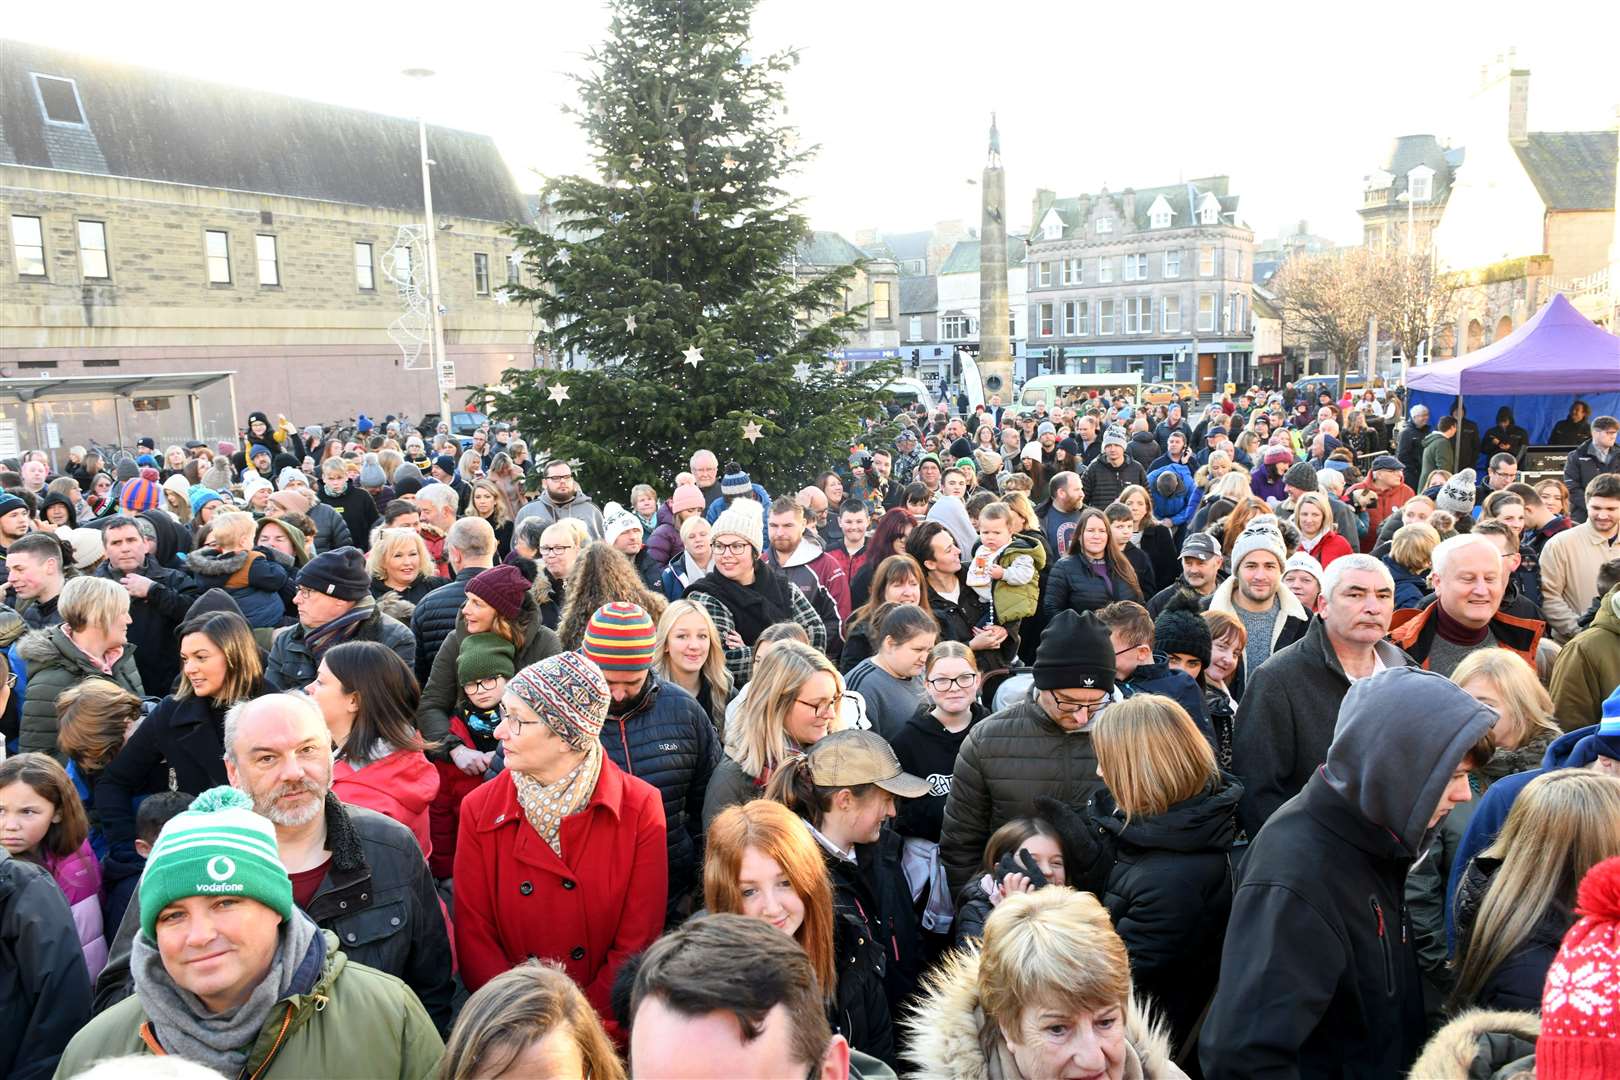 Falcon Square was full of people. Picture: Callum Mackay